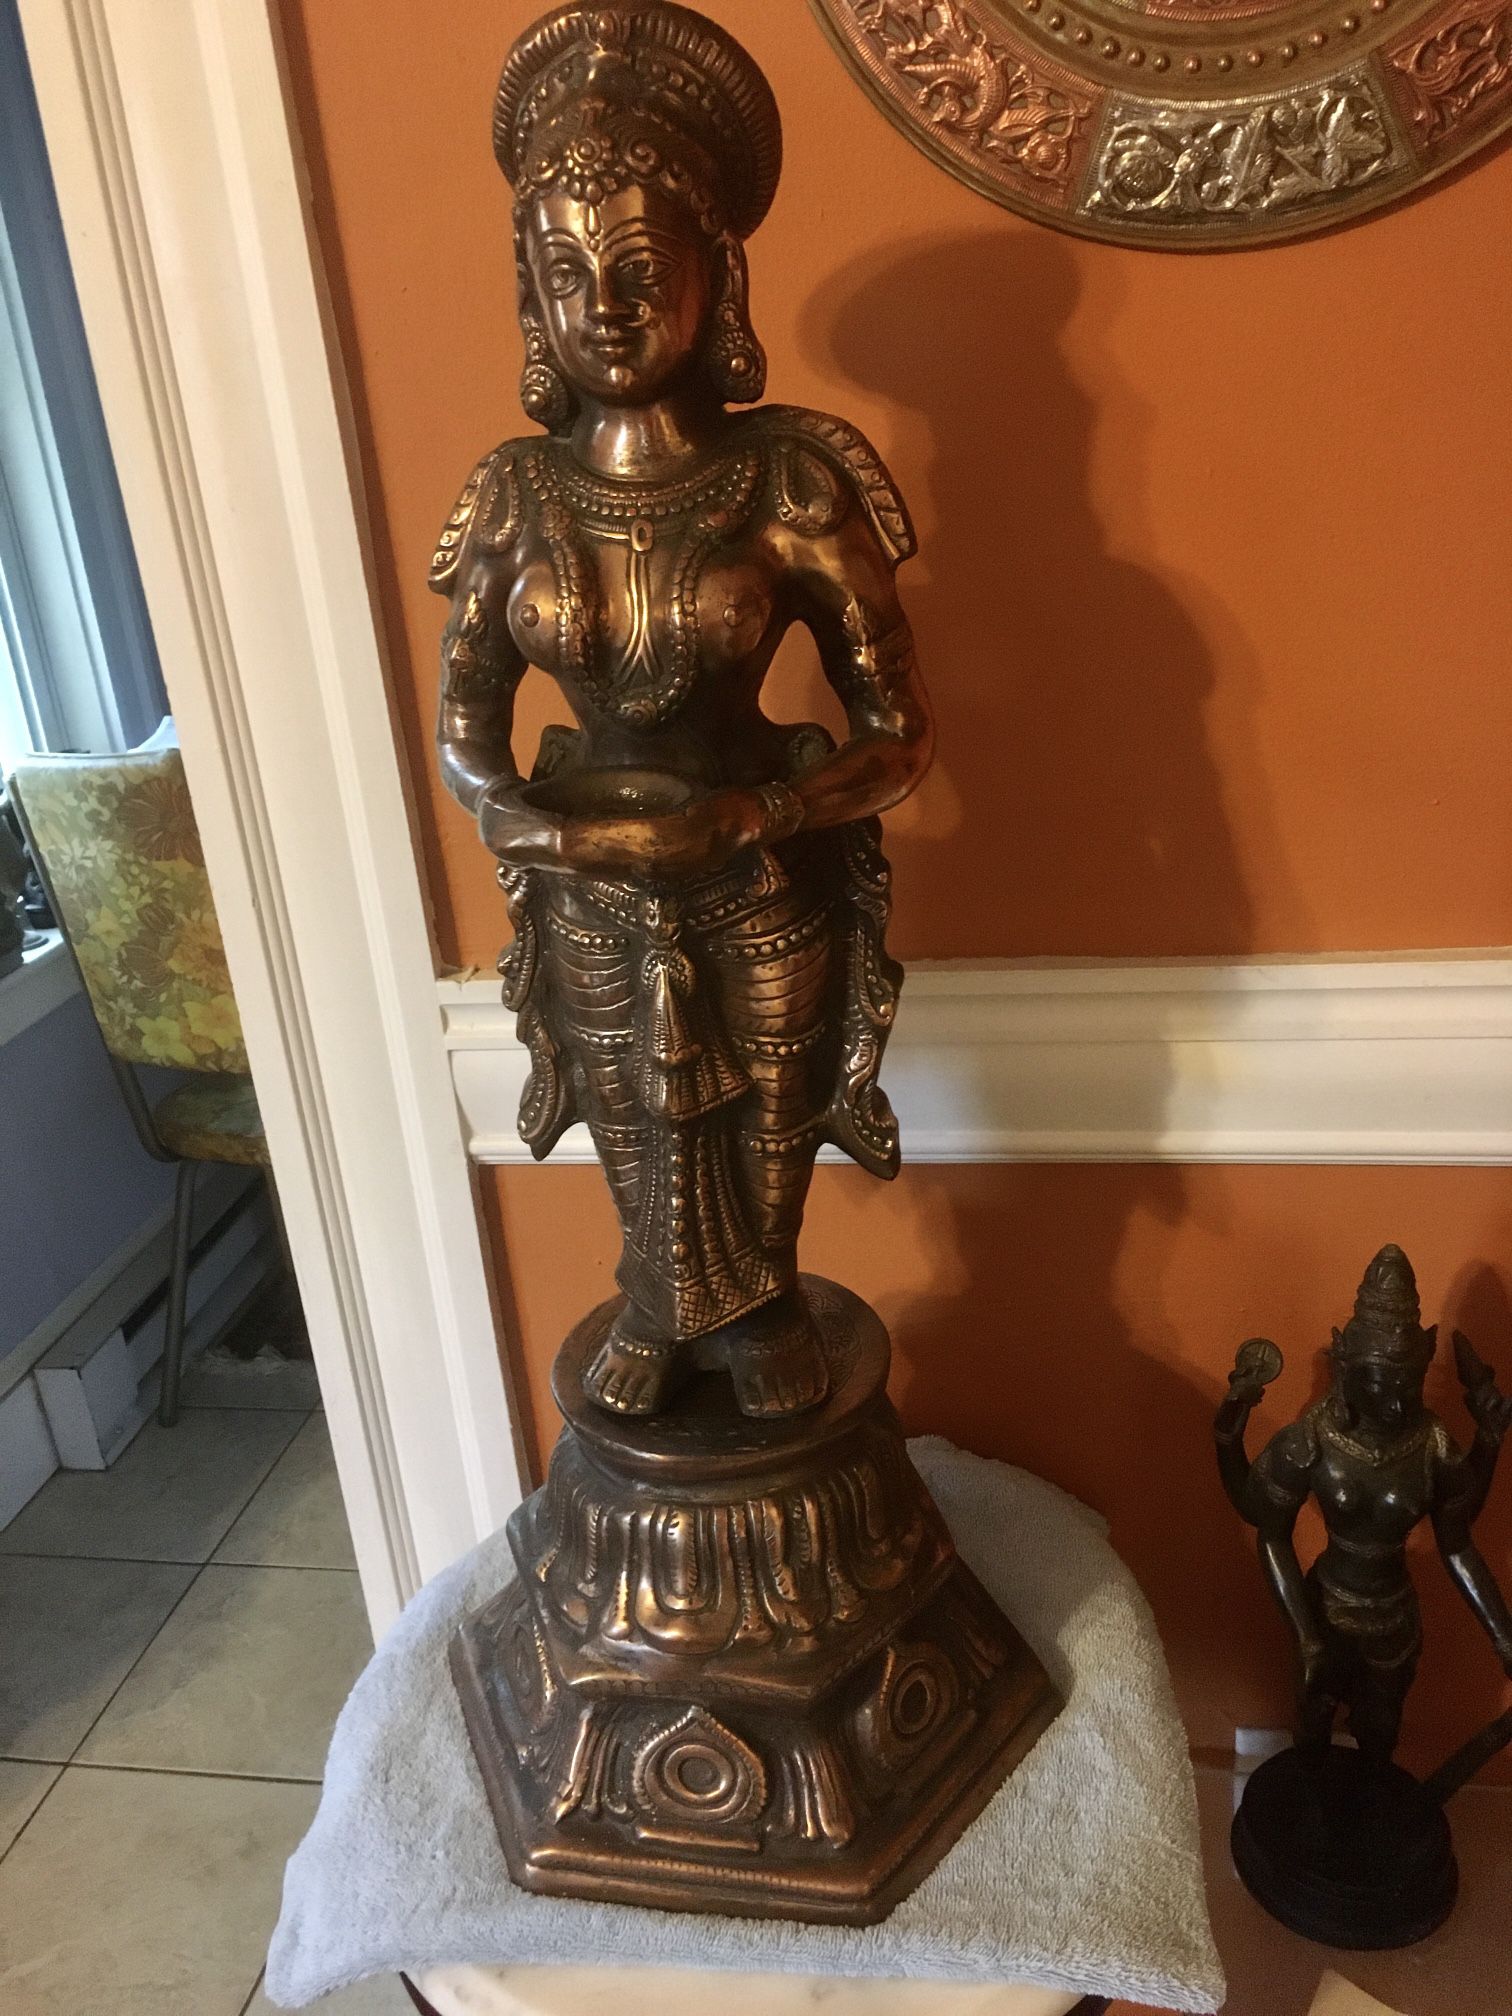 Diwali 26” tall Hindu Welcome Lady Diya - Oil Lamp